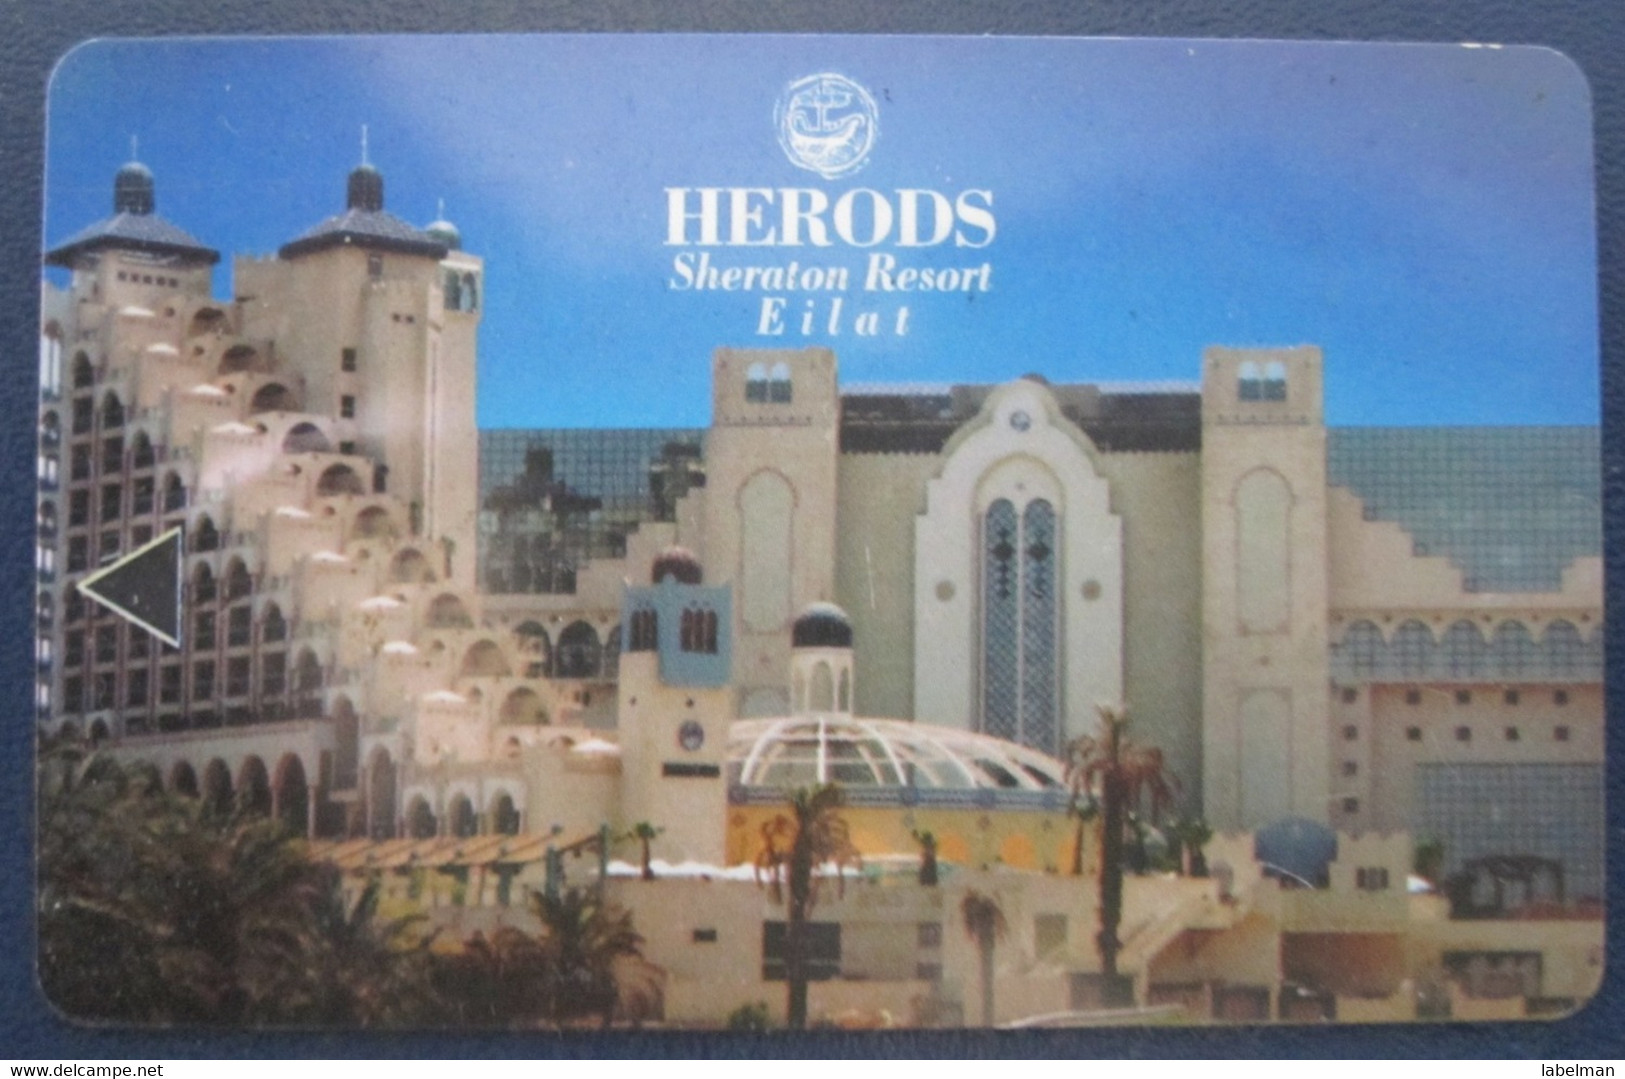 MISC HOTEL MOTEL INN PENSION MOTOR HOUSE RESIDENCE HERODS KING SHERATON JERUSALEM TIBERIAS EILAT KEY CARD ISRAEL - Hotel Labels